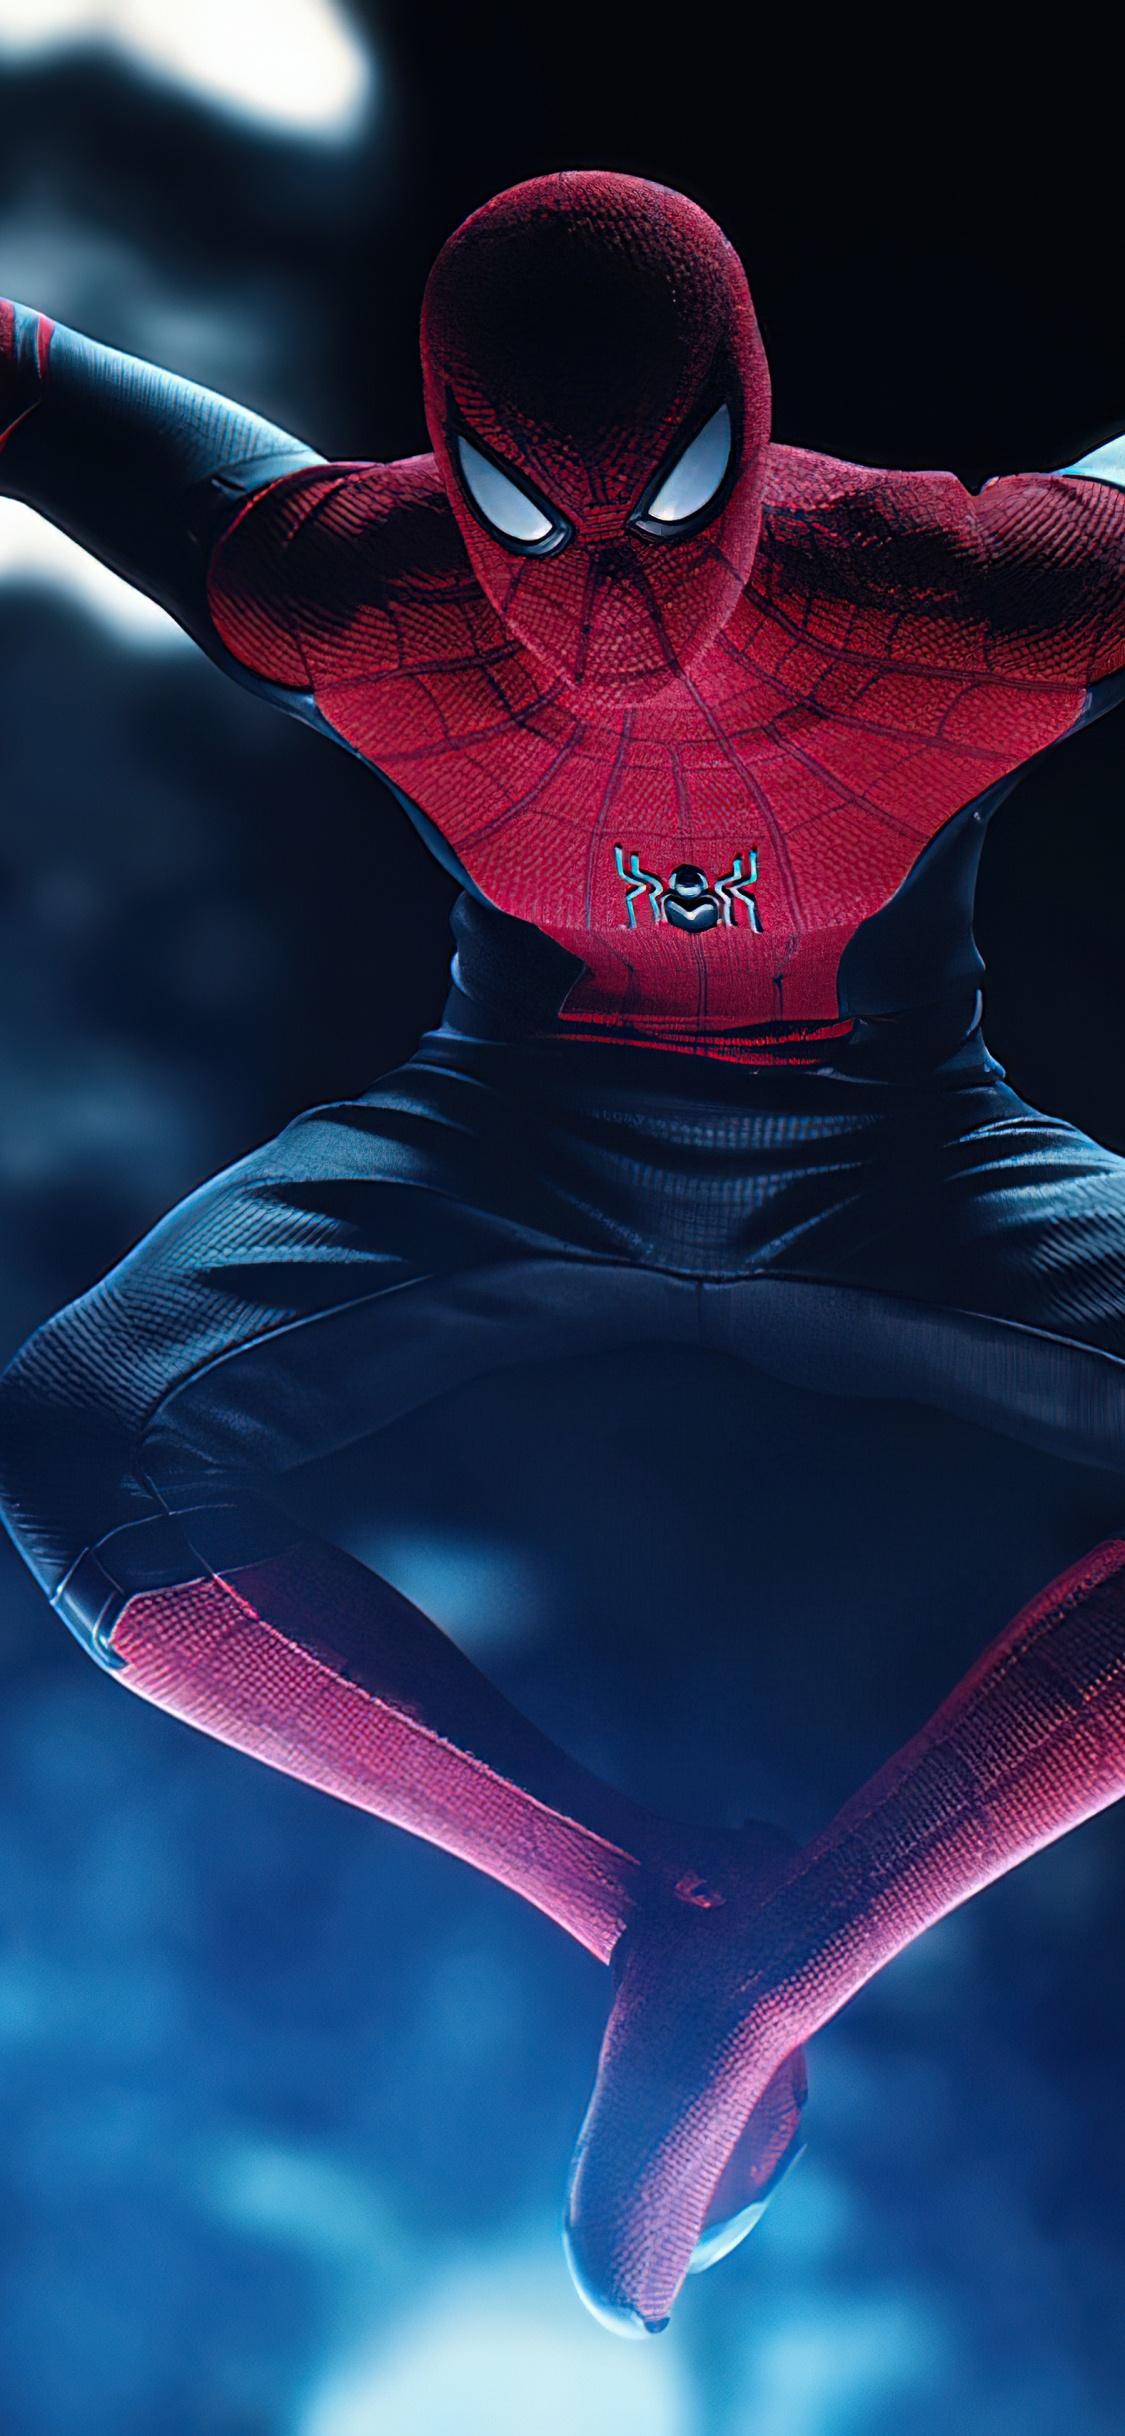 Spider Man Miles Morales 4k iPhone Hd Full Wallpapers